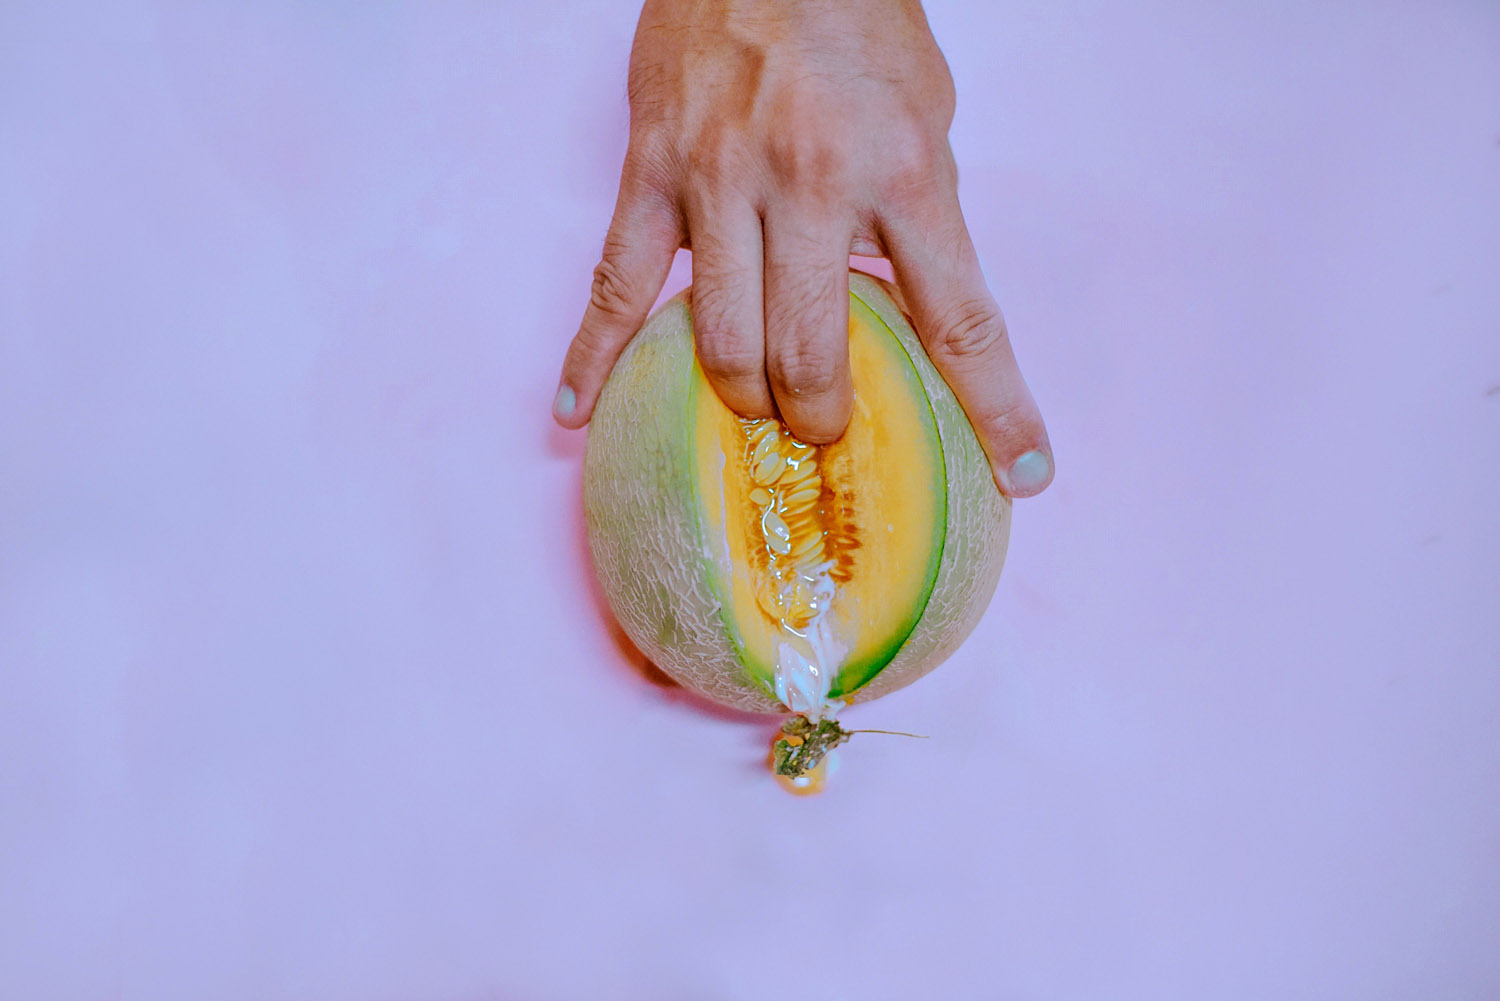 A man fingering a melon